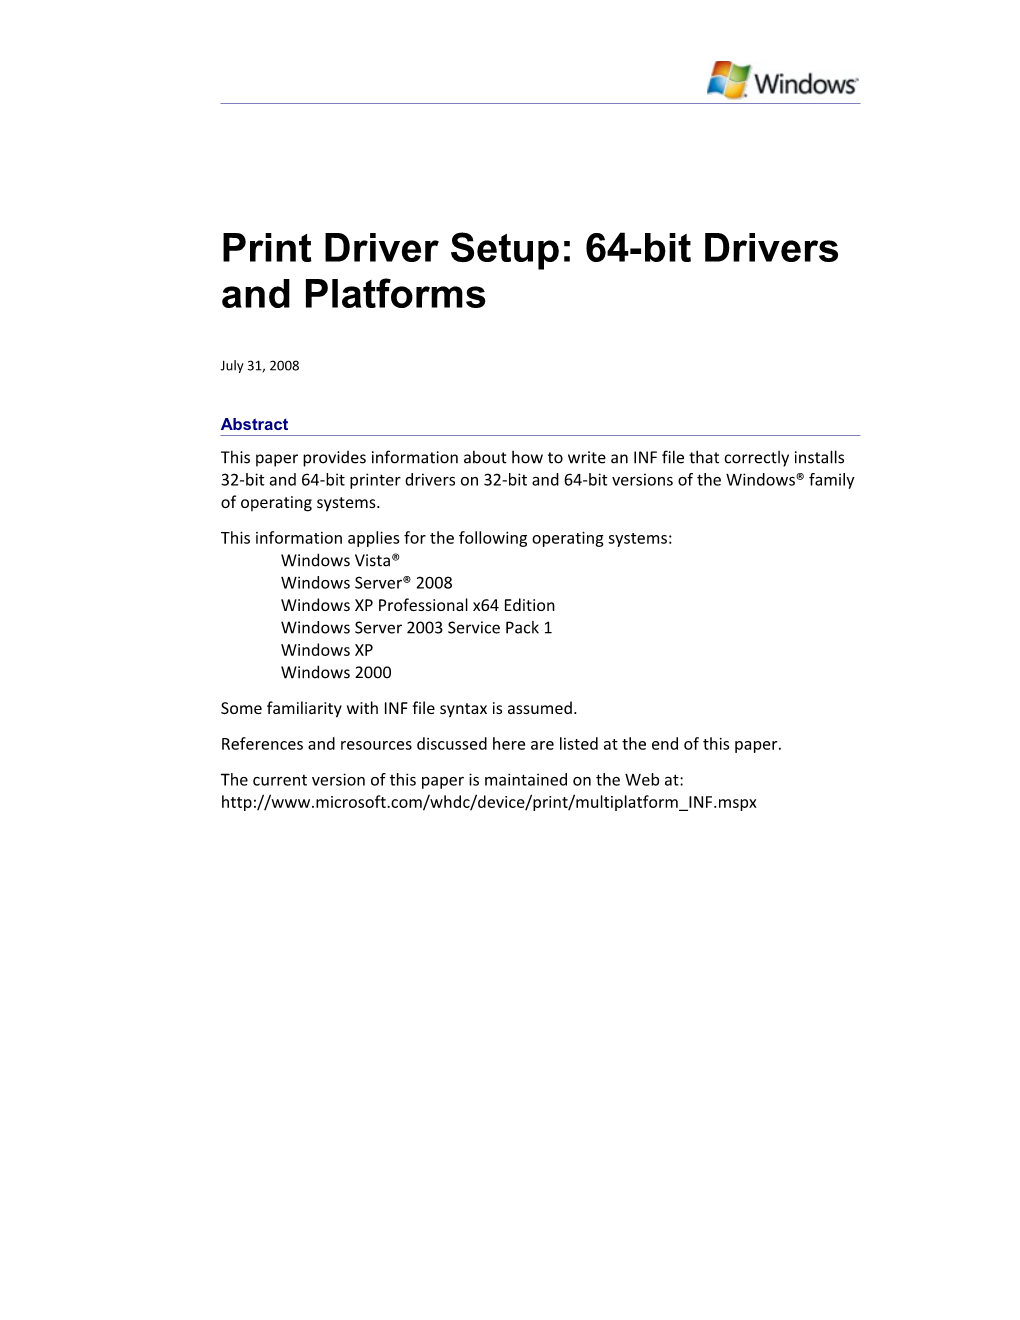 Print Driver Setup: 64-Bit Drivers and Platforms